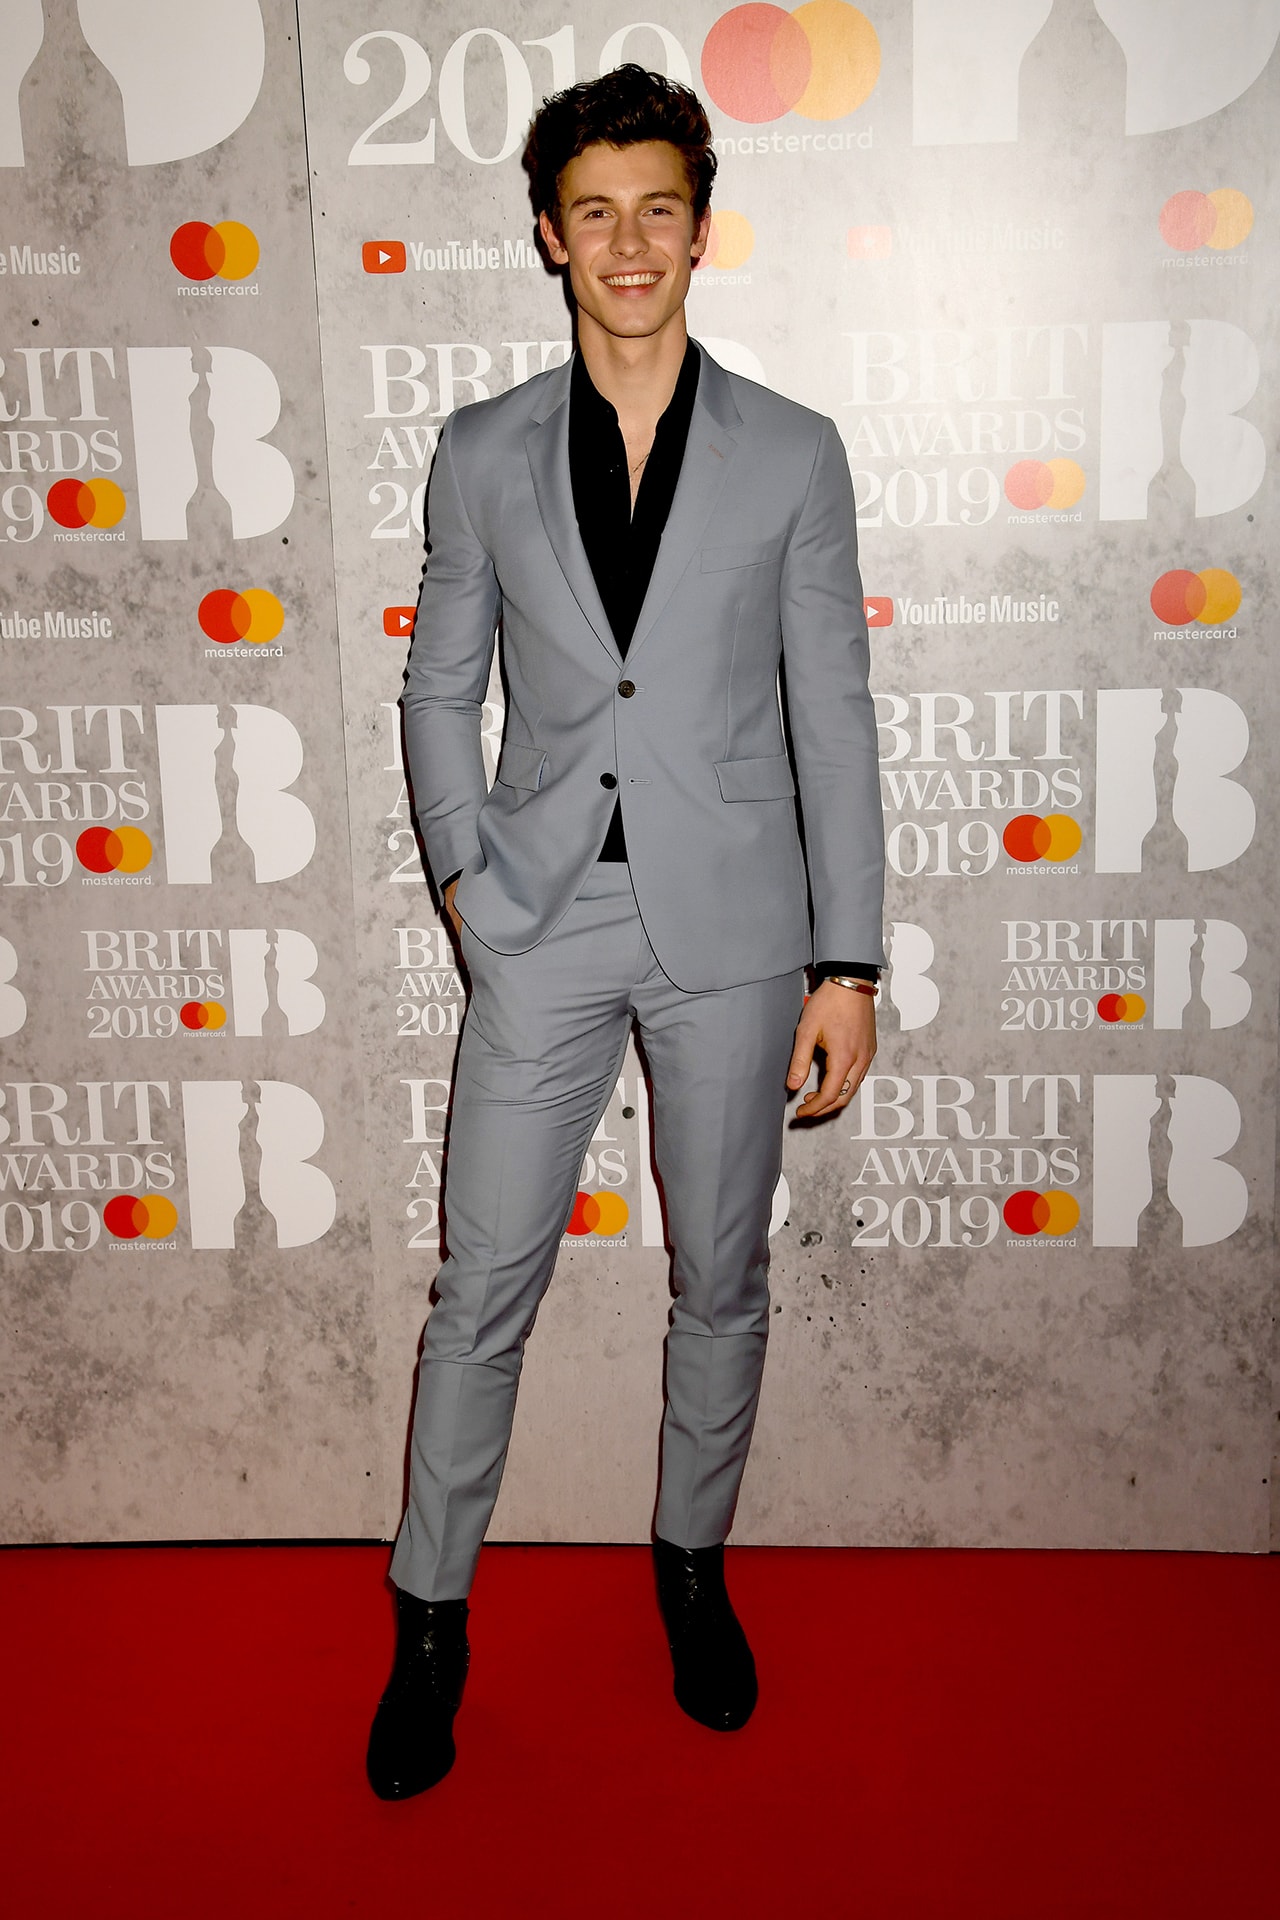 Shawn Mendes brit awards 2019 red carpet suit grey